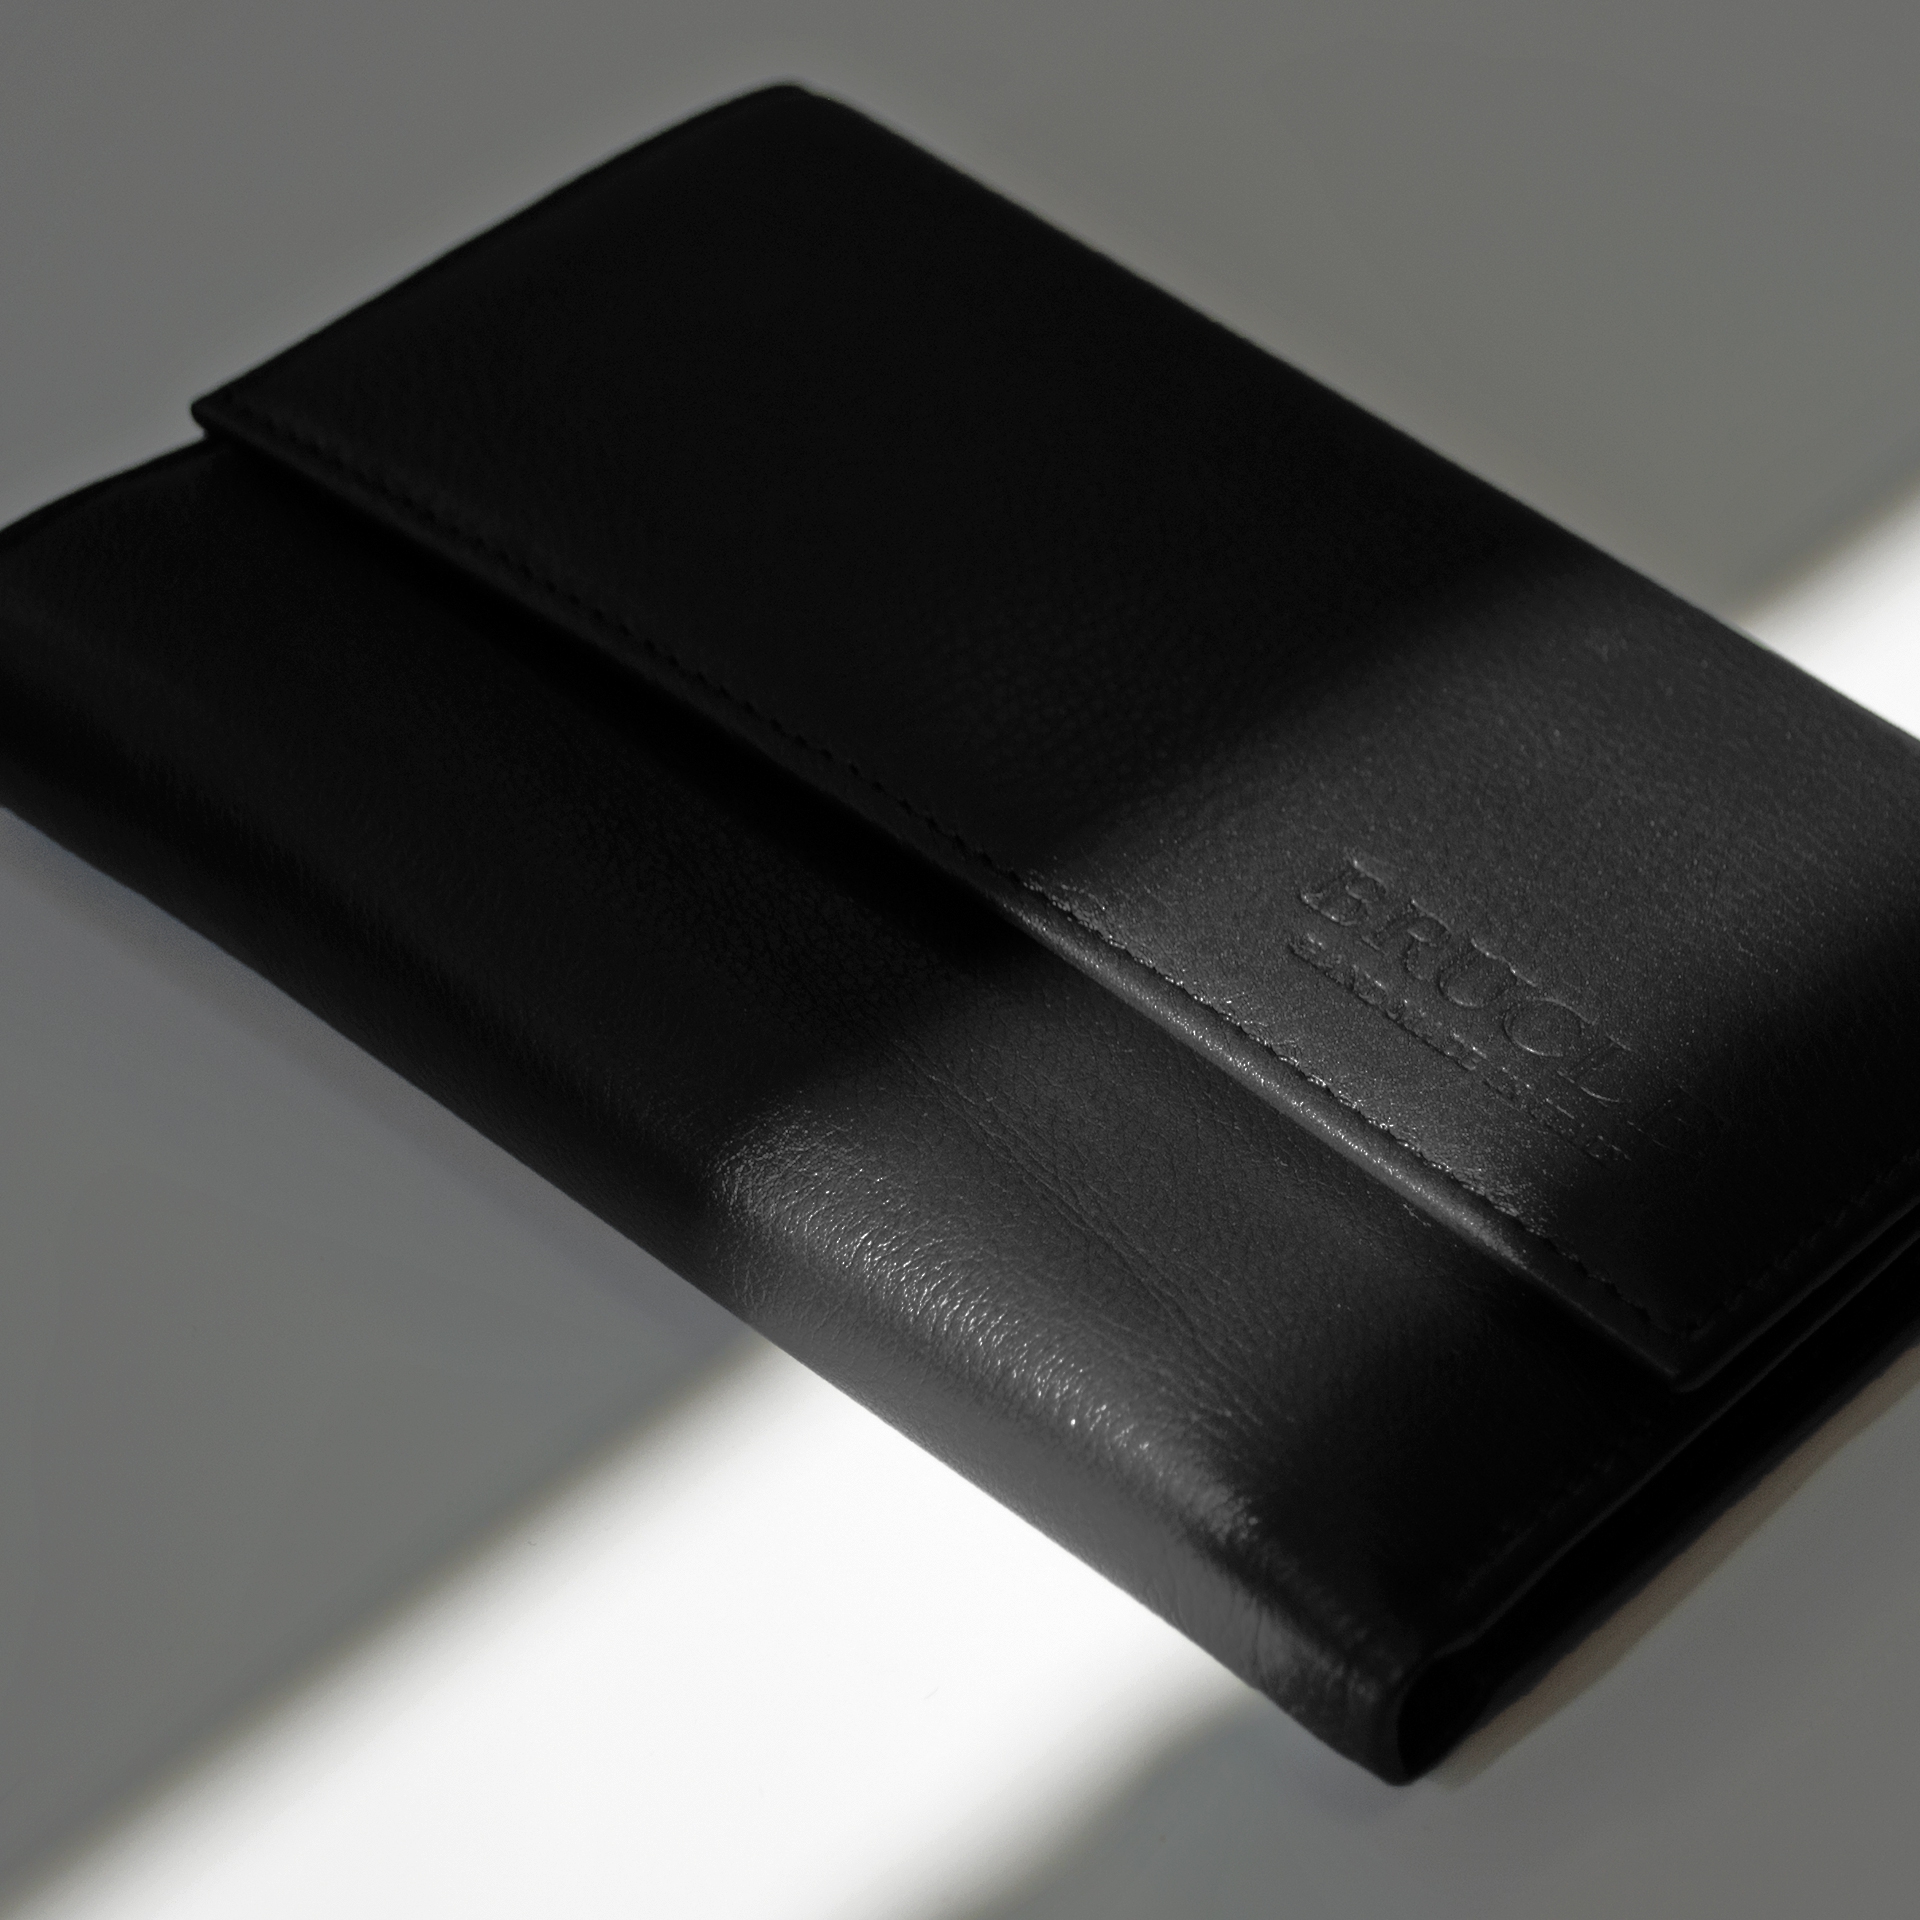 Black leather rectangular coin purse